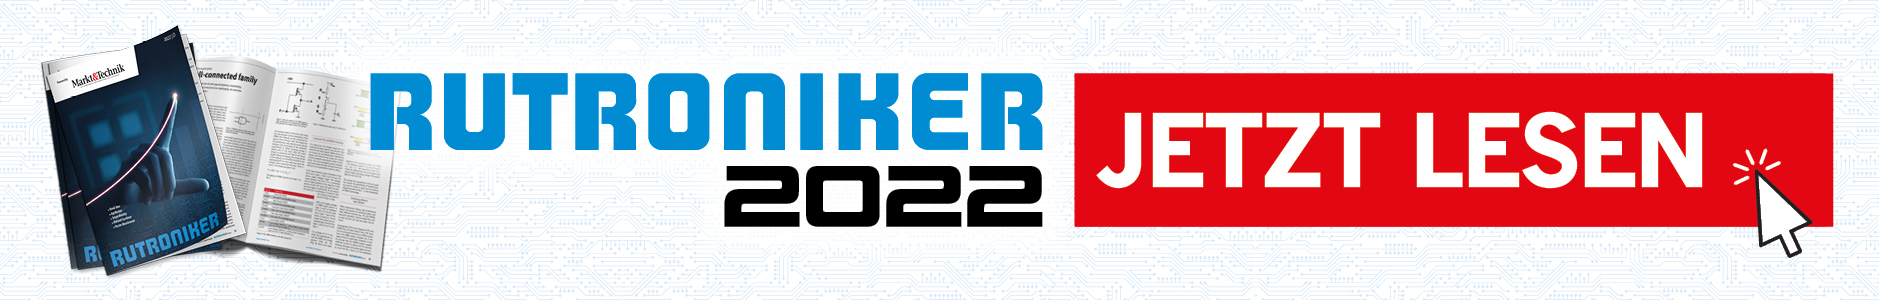 RUTRONIKER 2022